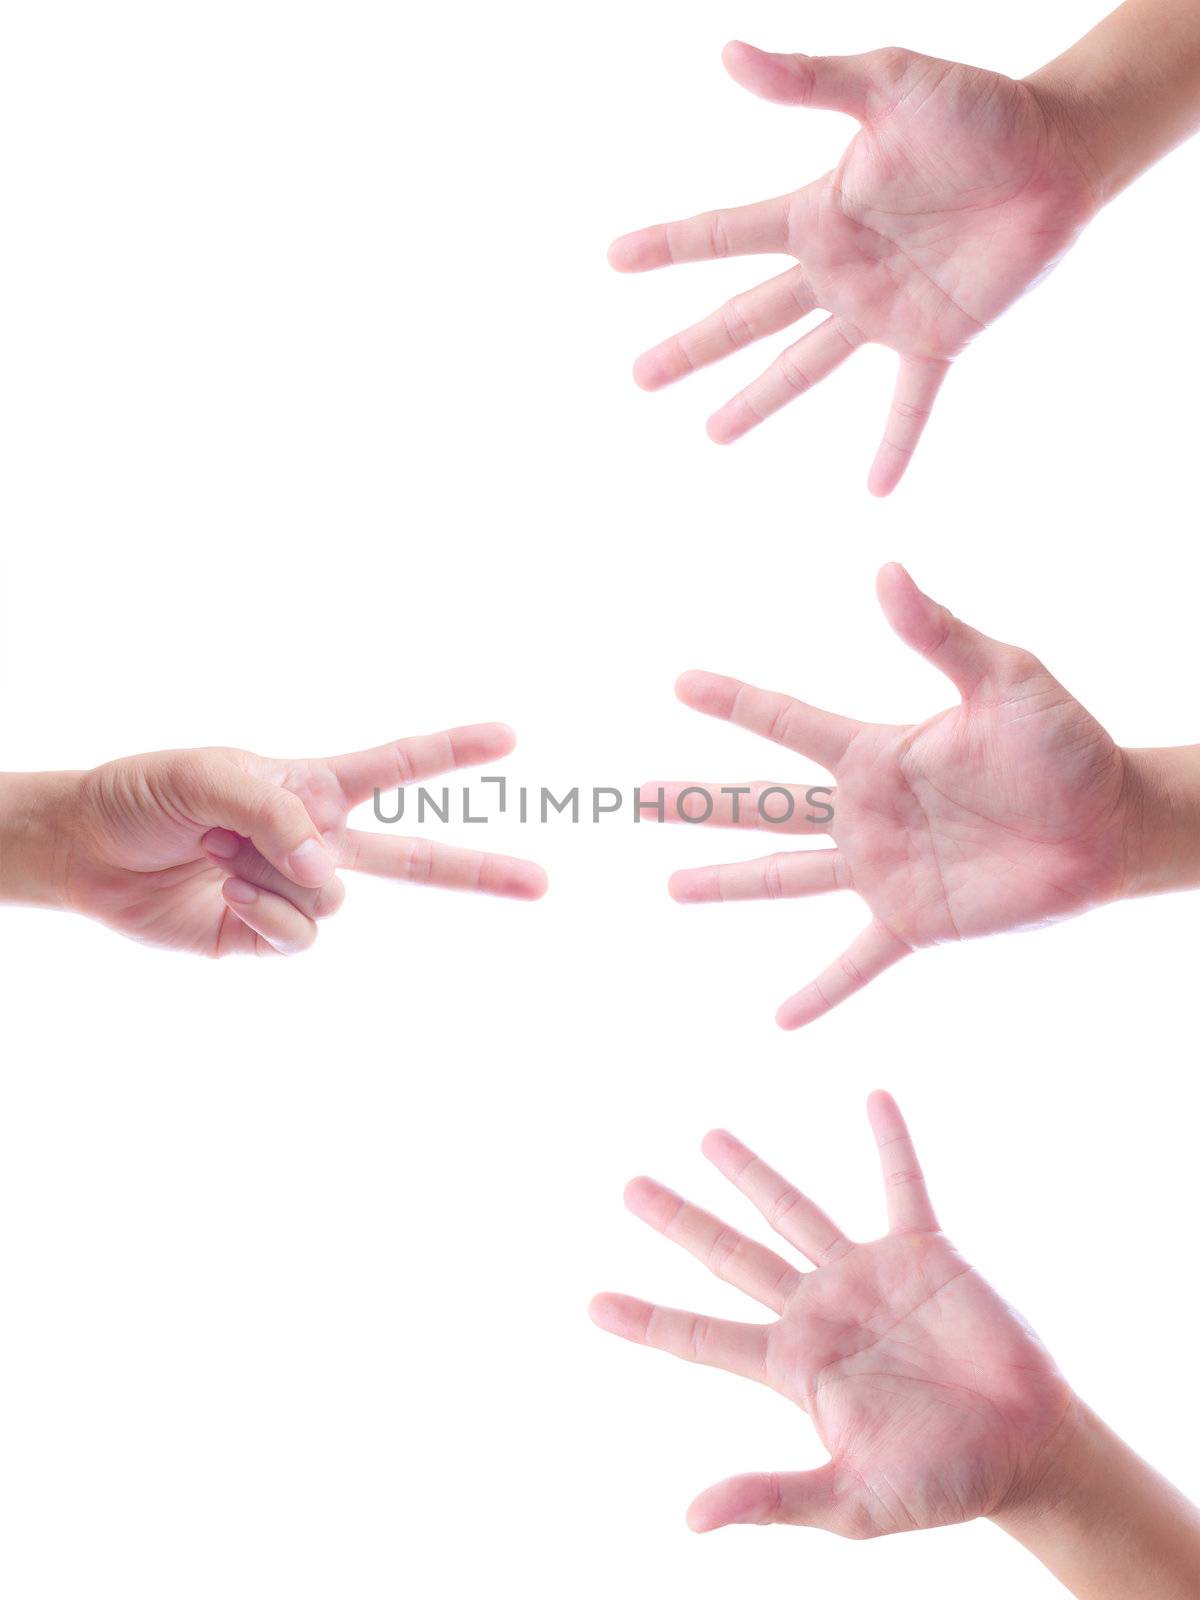 hand symbol isolated